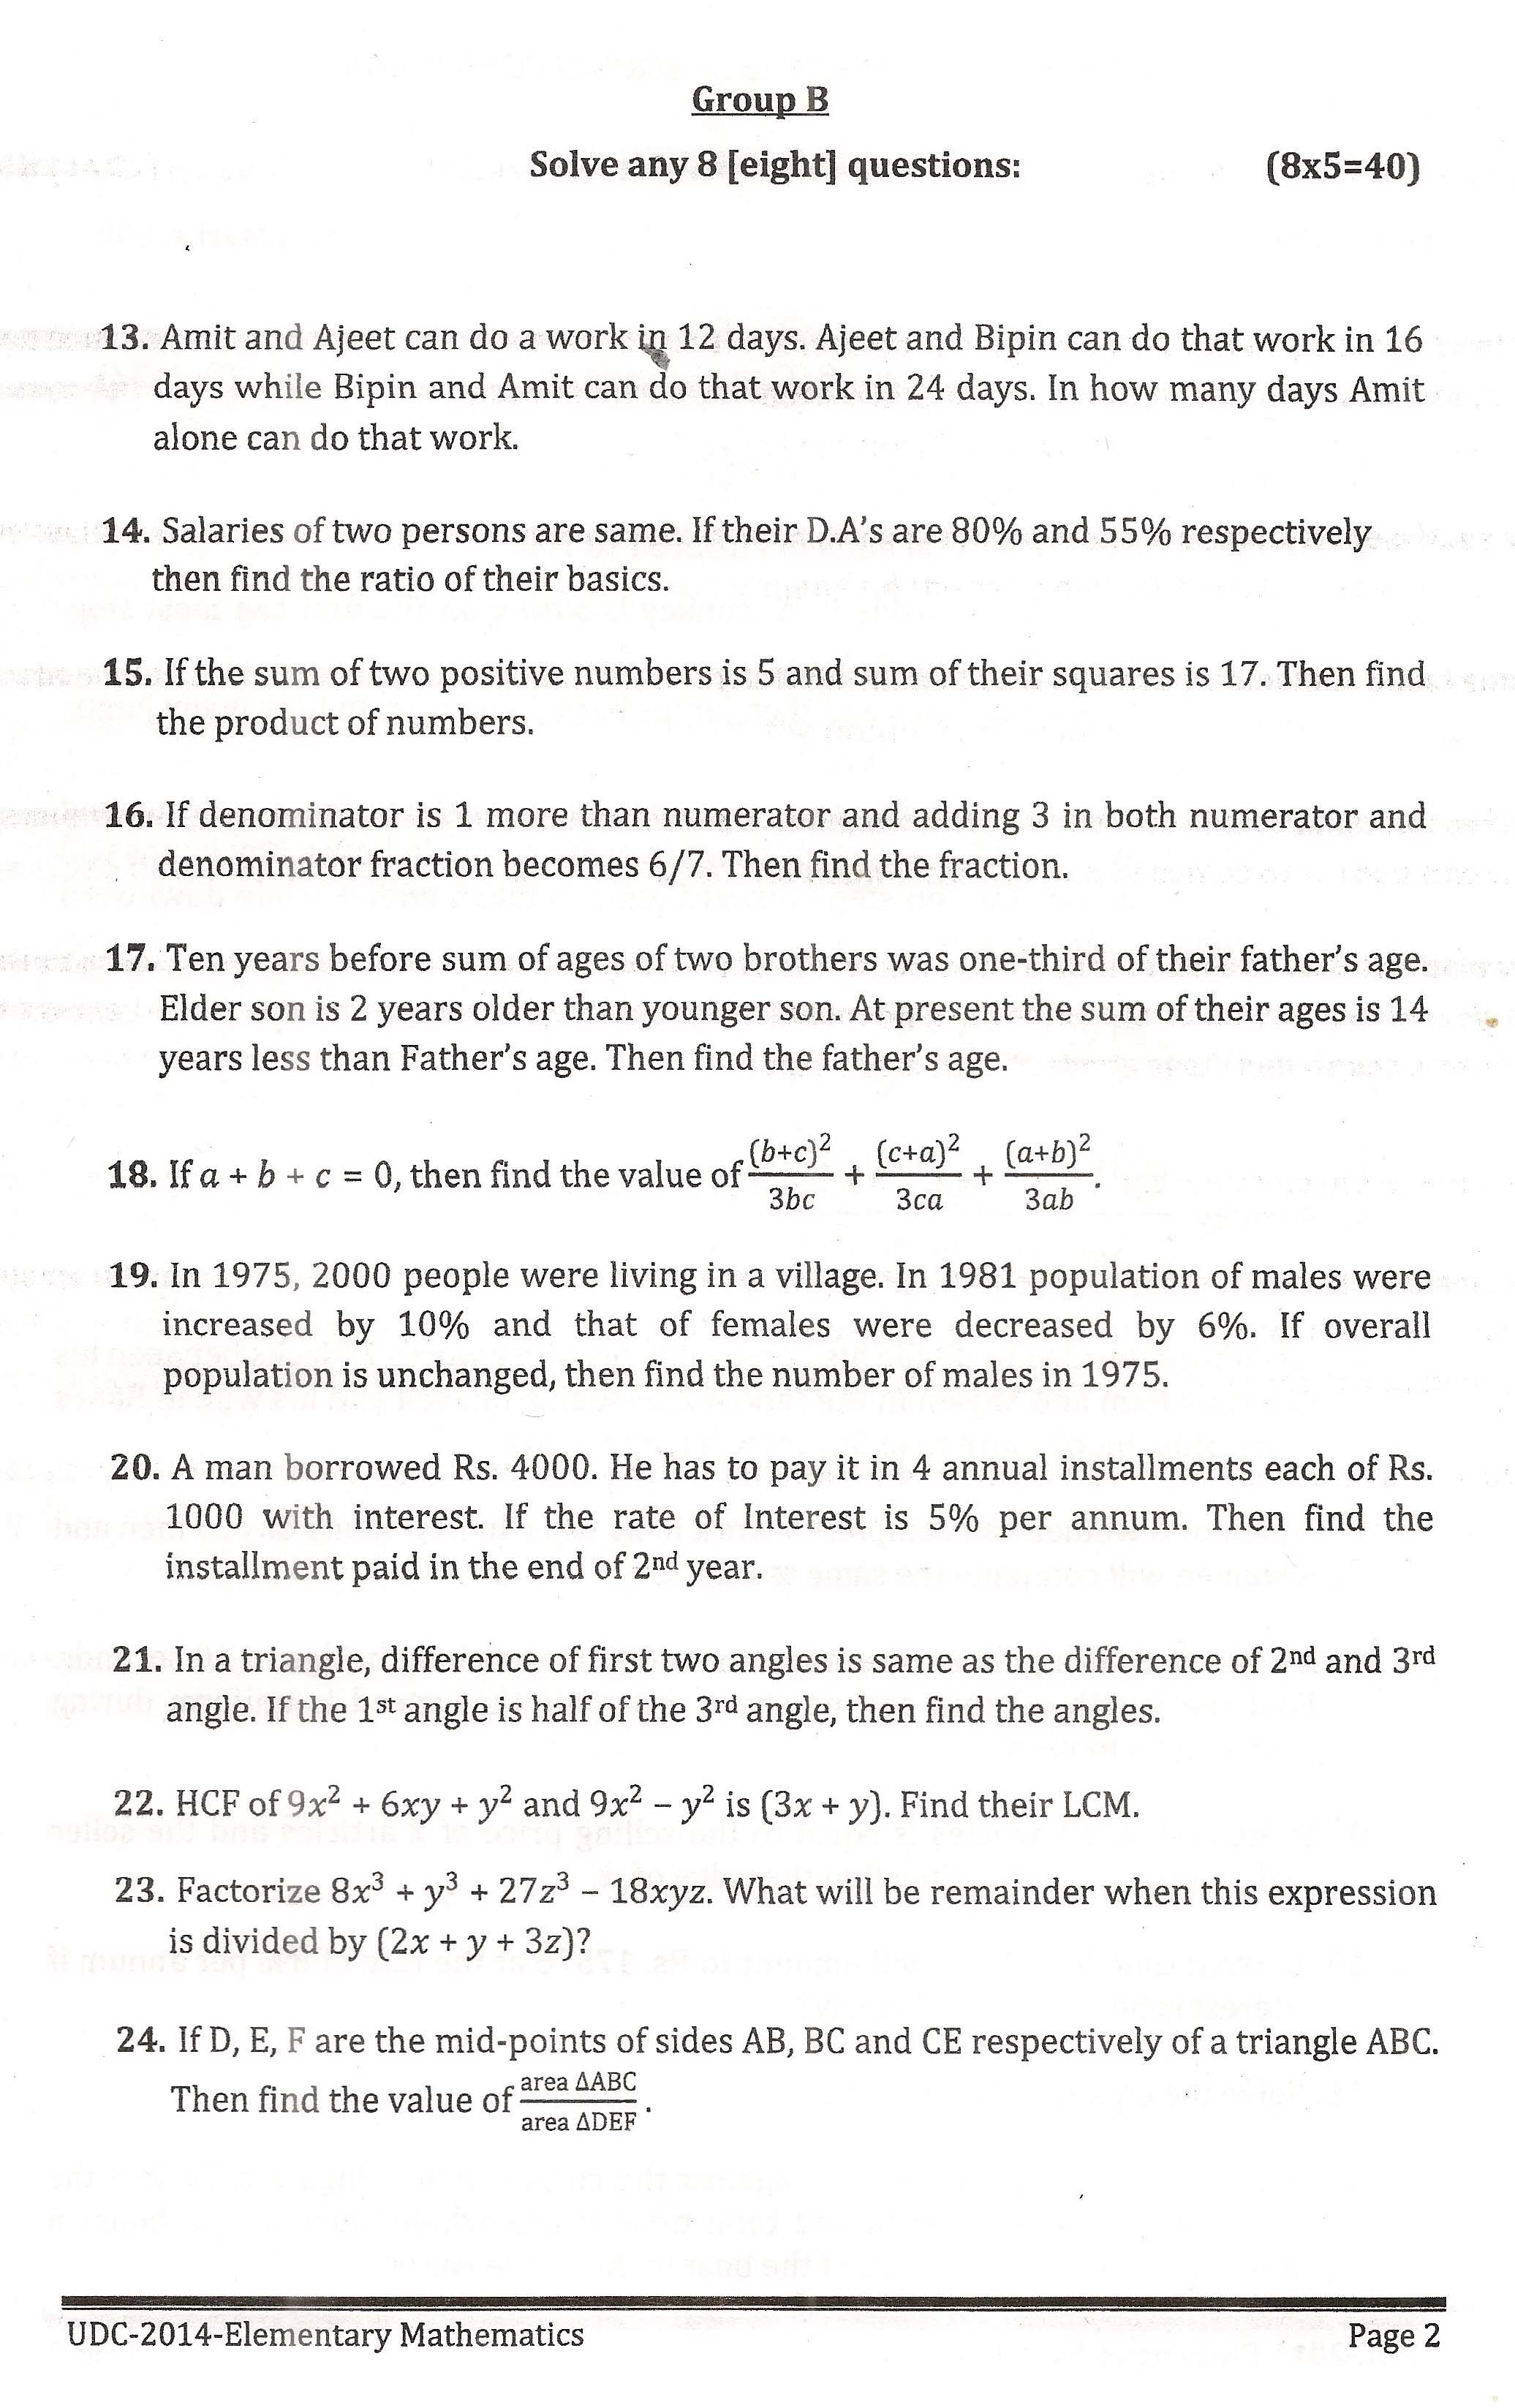 APPSC Upper Division Clerk Mathematics Exam Question Paper 2014 2